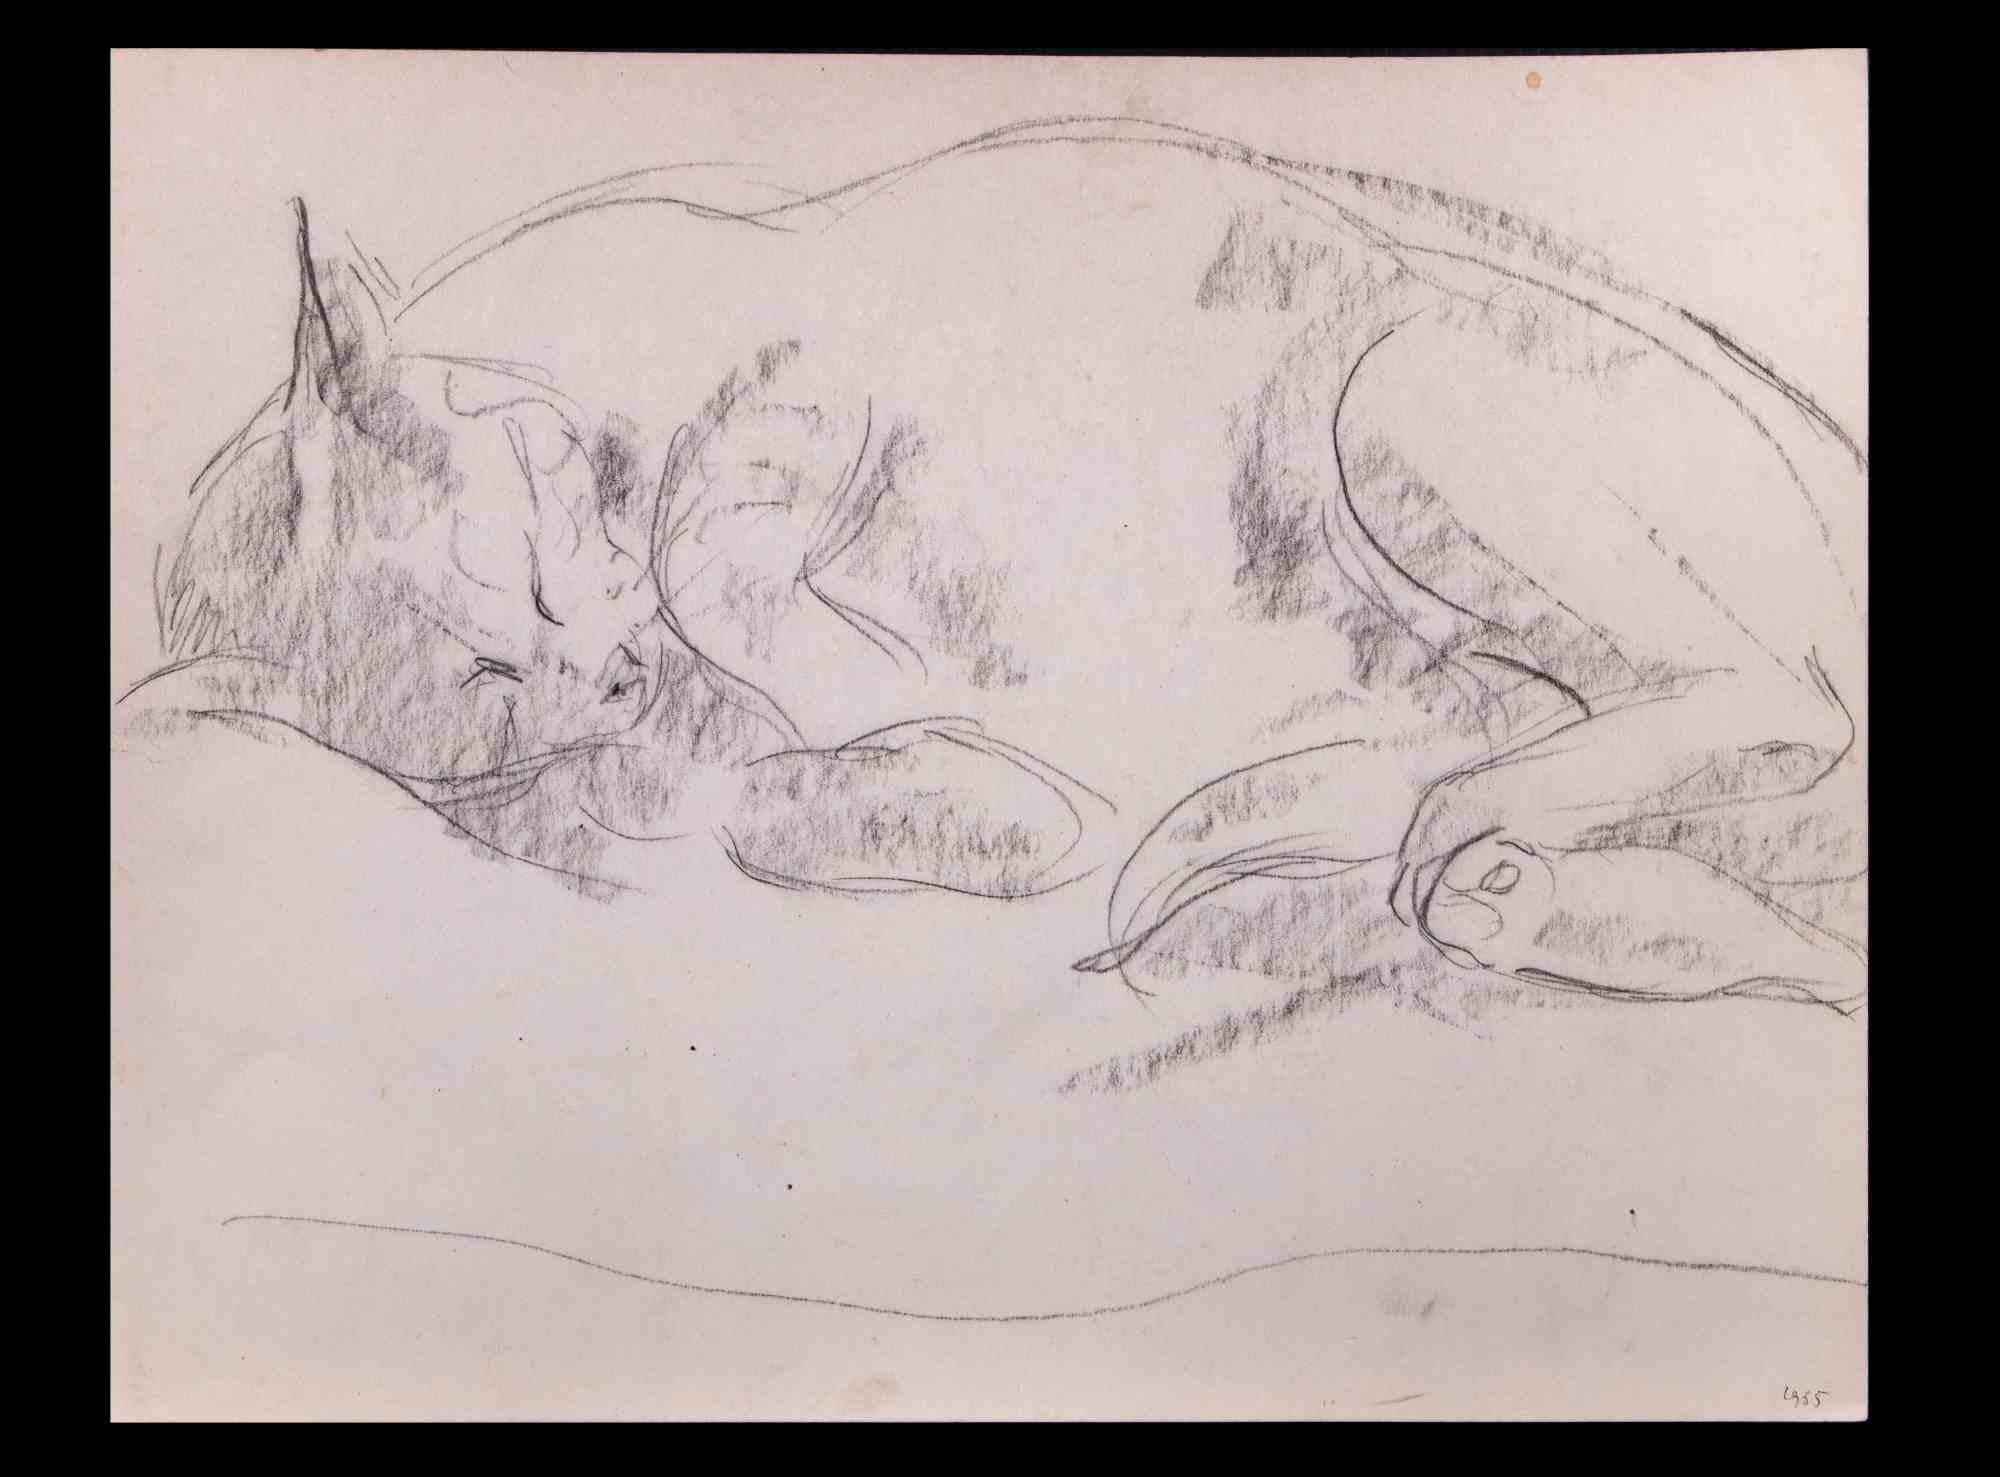 Sleeping Cat - Original Pencil Drawing by Giselle Halff - 1965